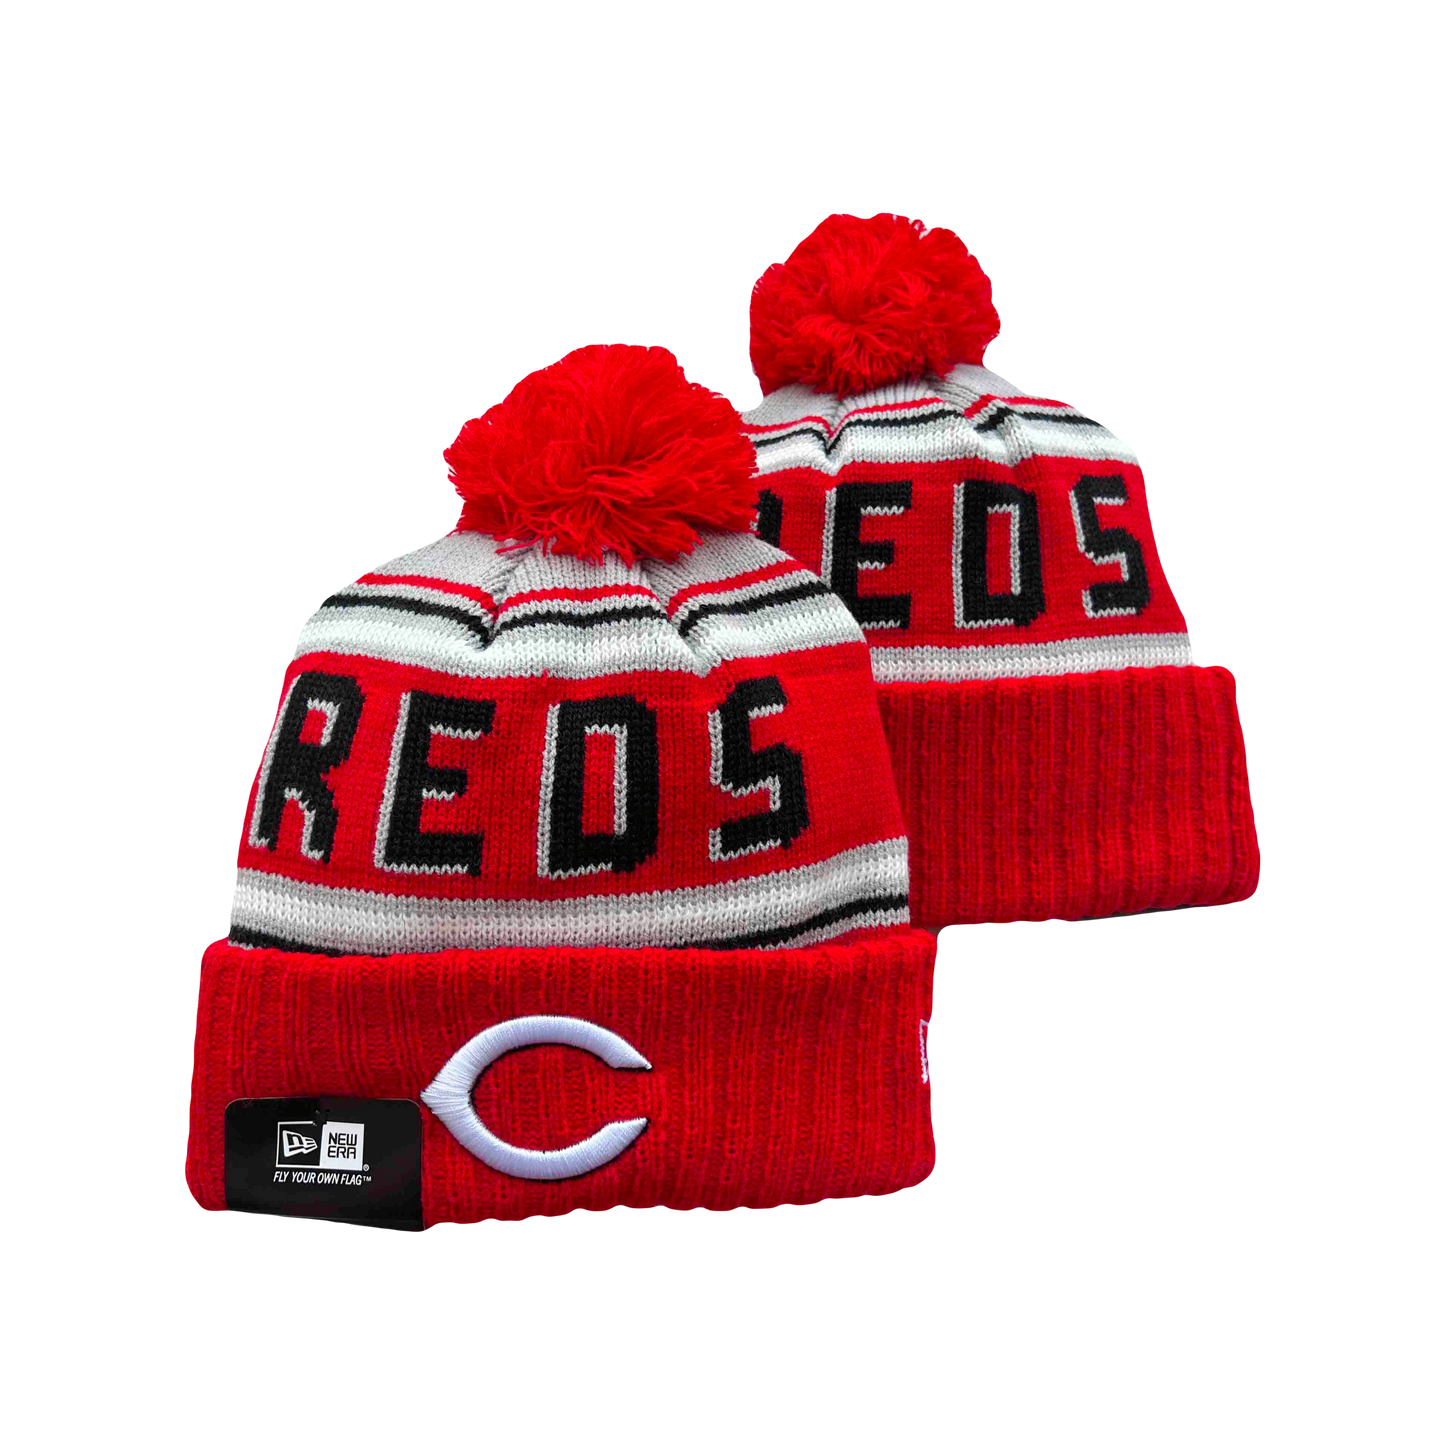 Cincinnati Reds MLB New Era Knit ‘Statement’ Beanie